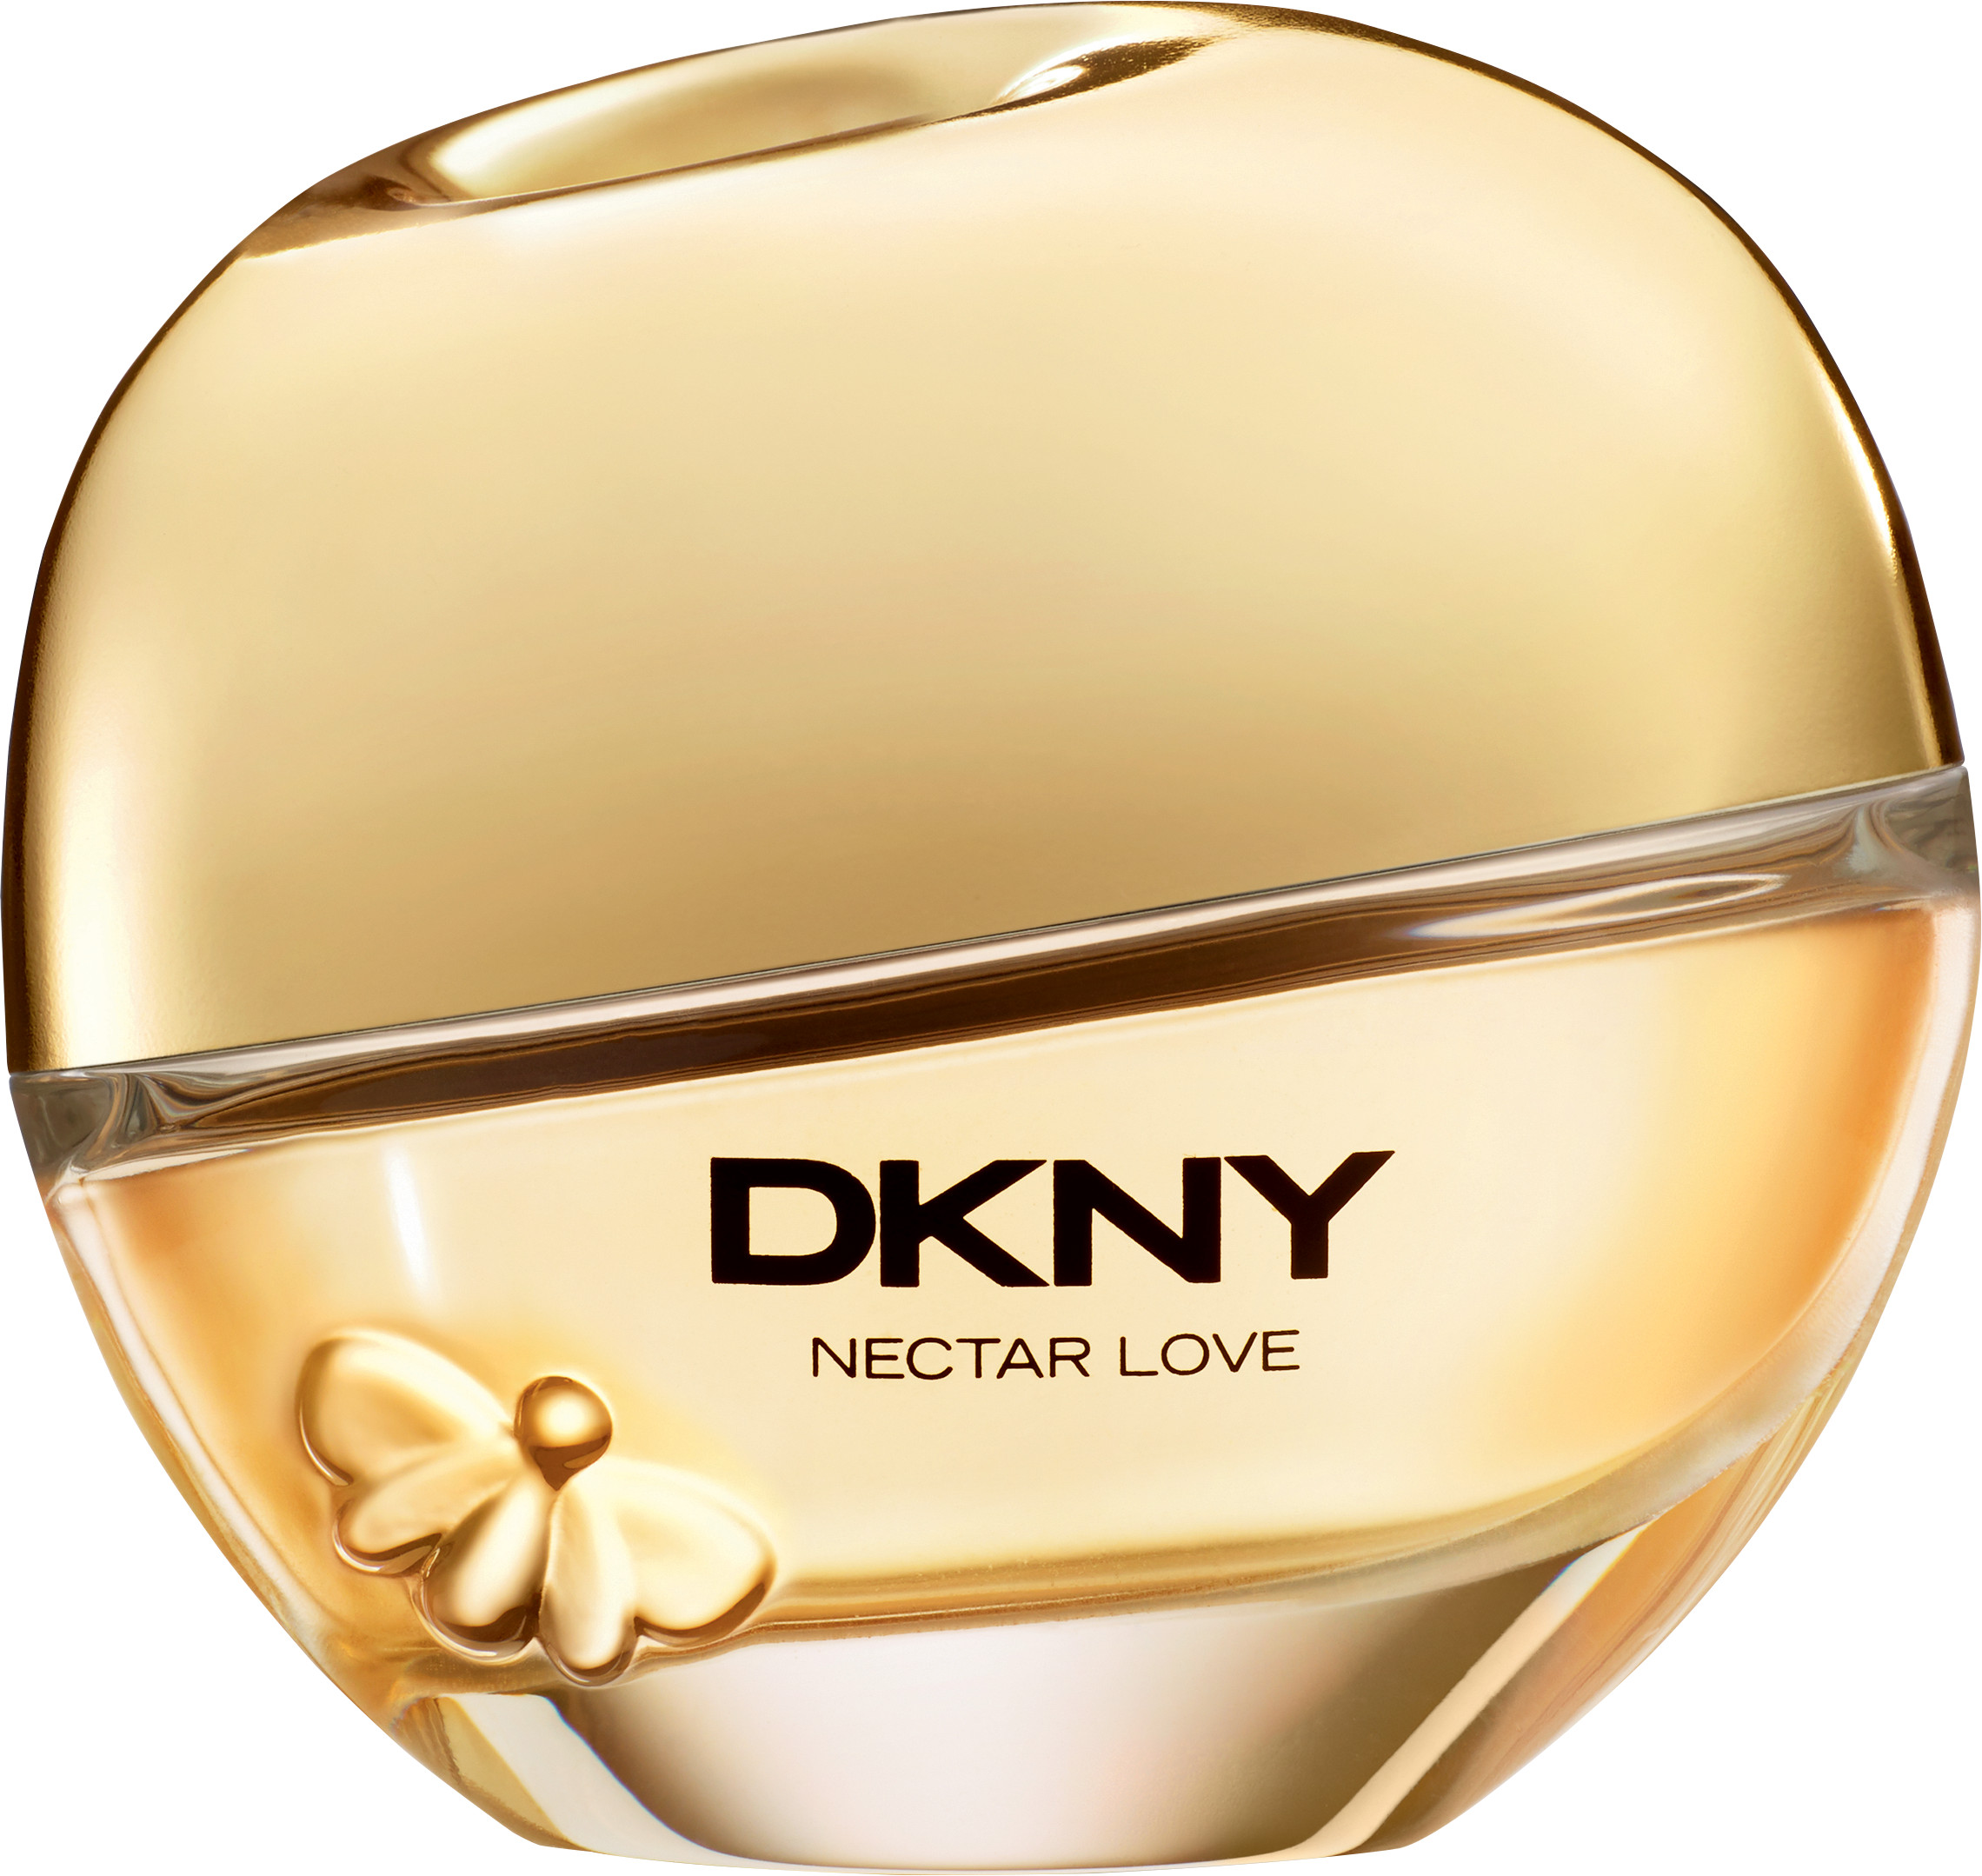 Nectar Love od DKNY